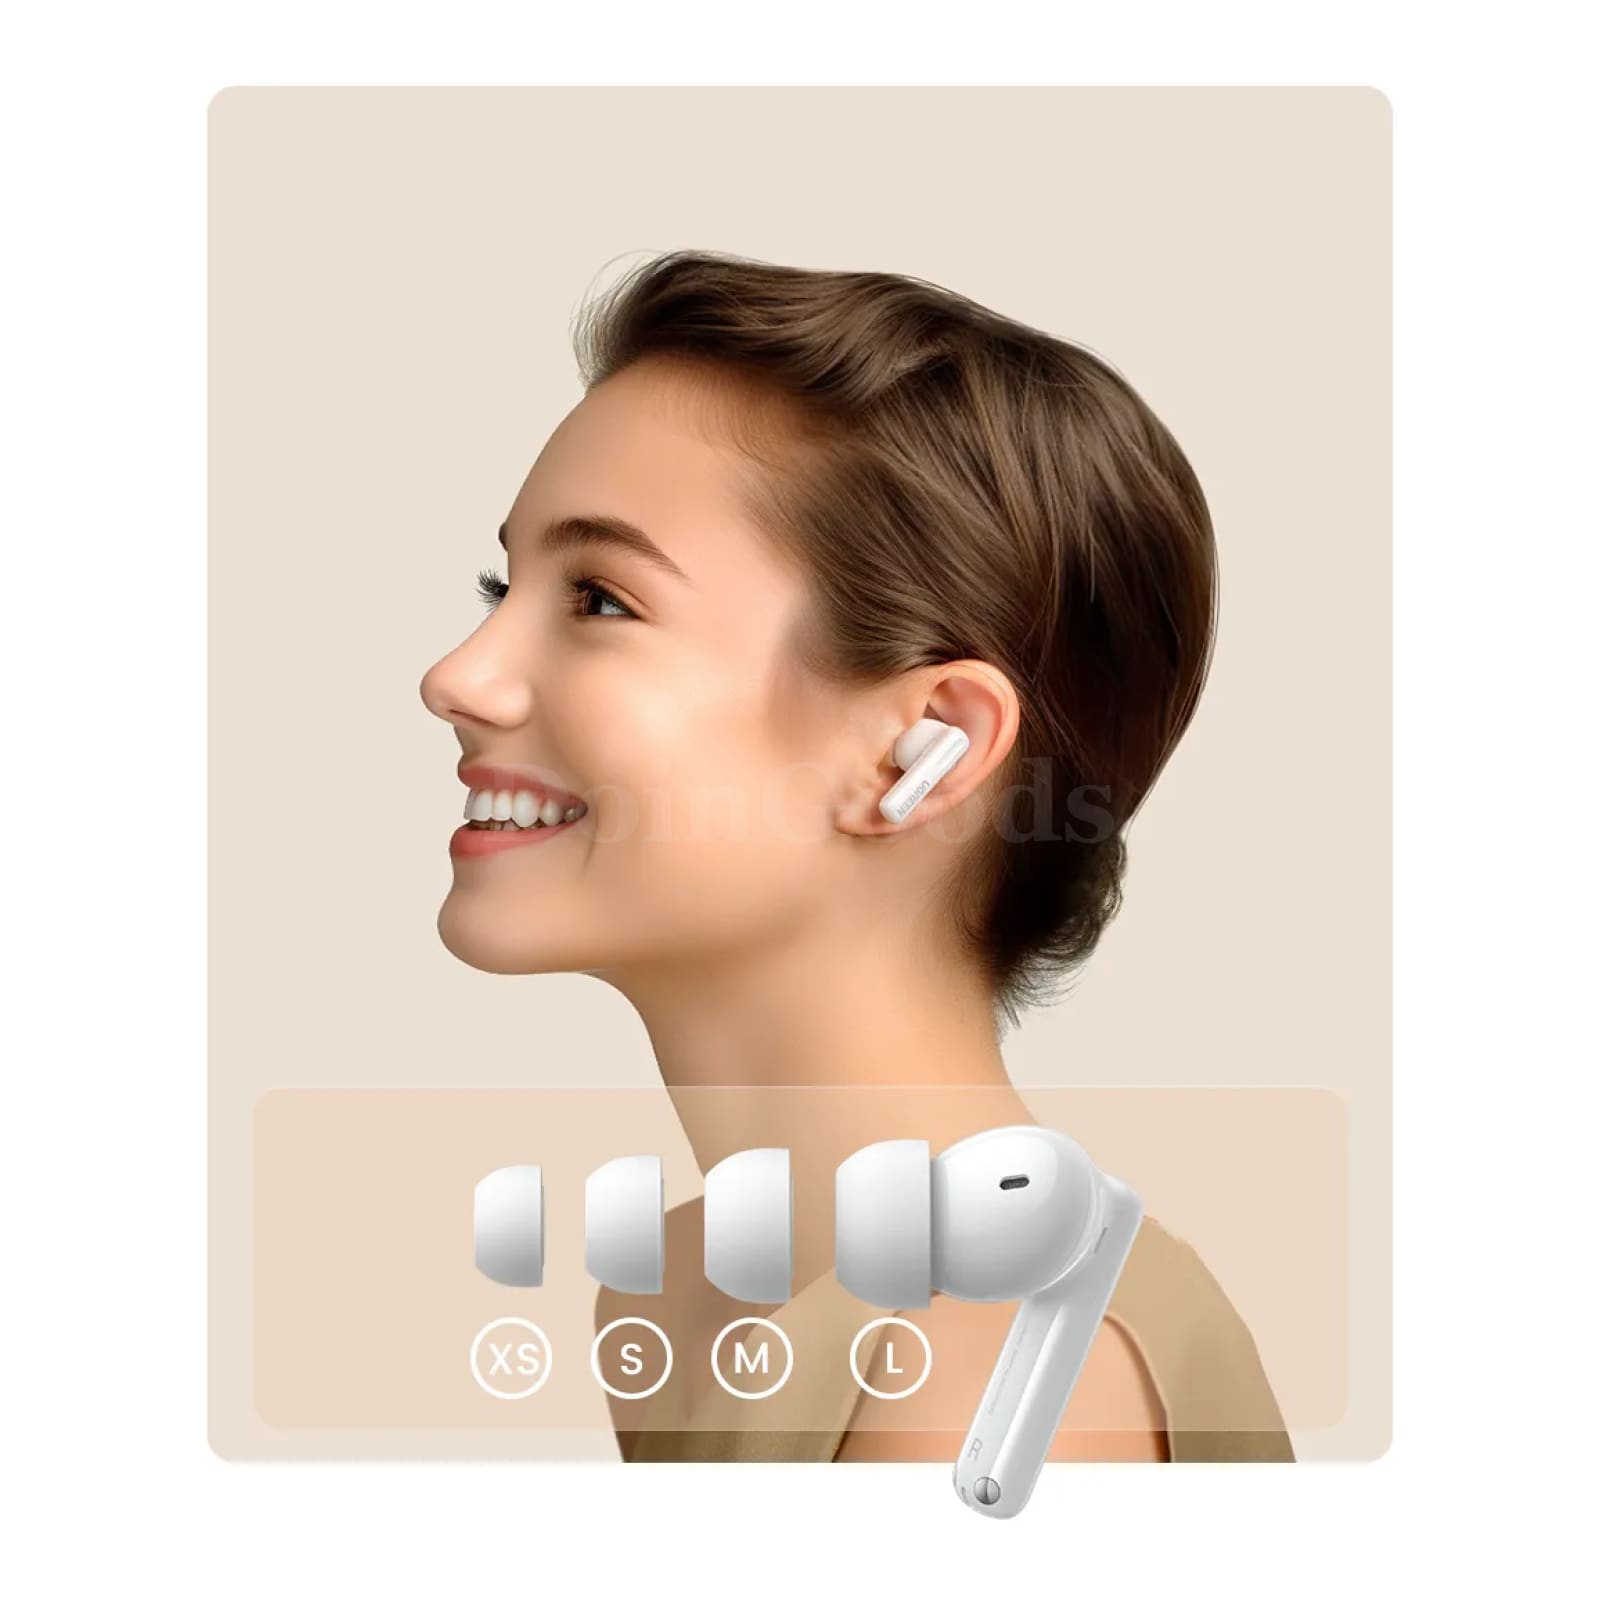 Ugreen Hitune X6 Anc Wireless Headphone Bluetooth 5.1 Tws Earbuds Iphone Pro Max 301635